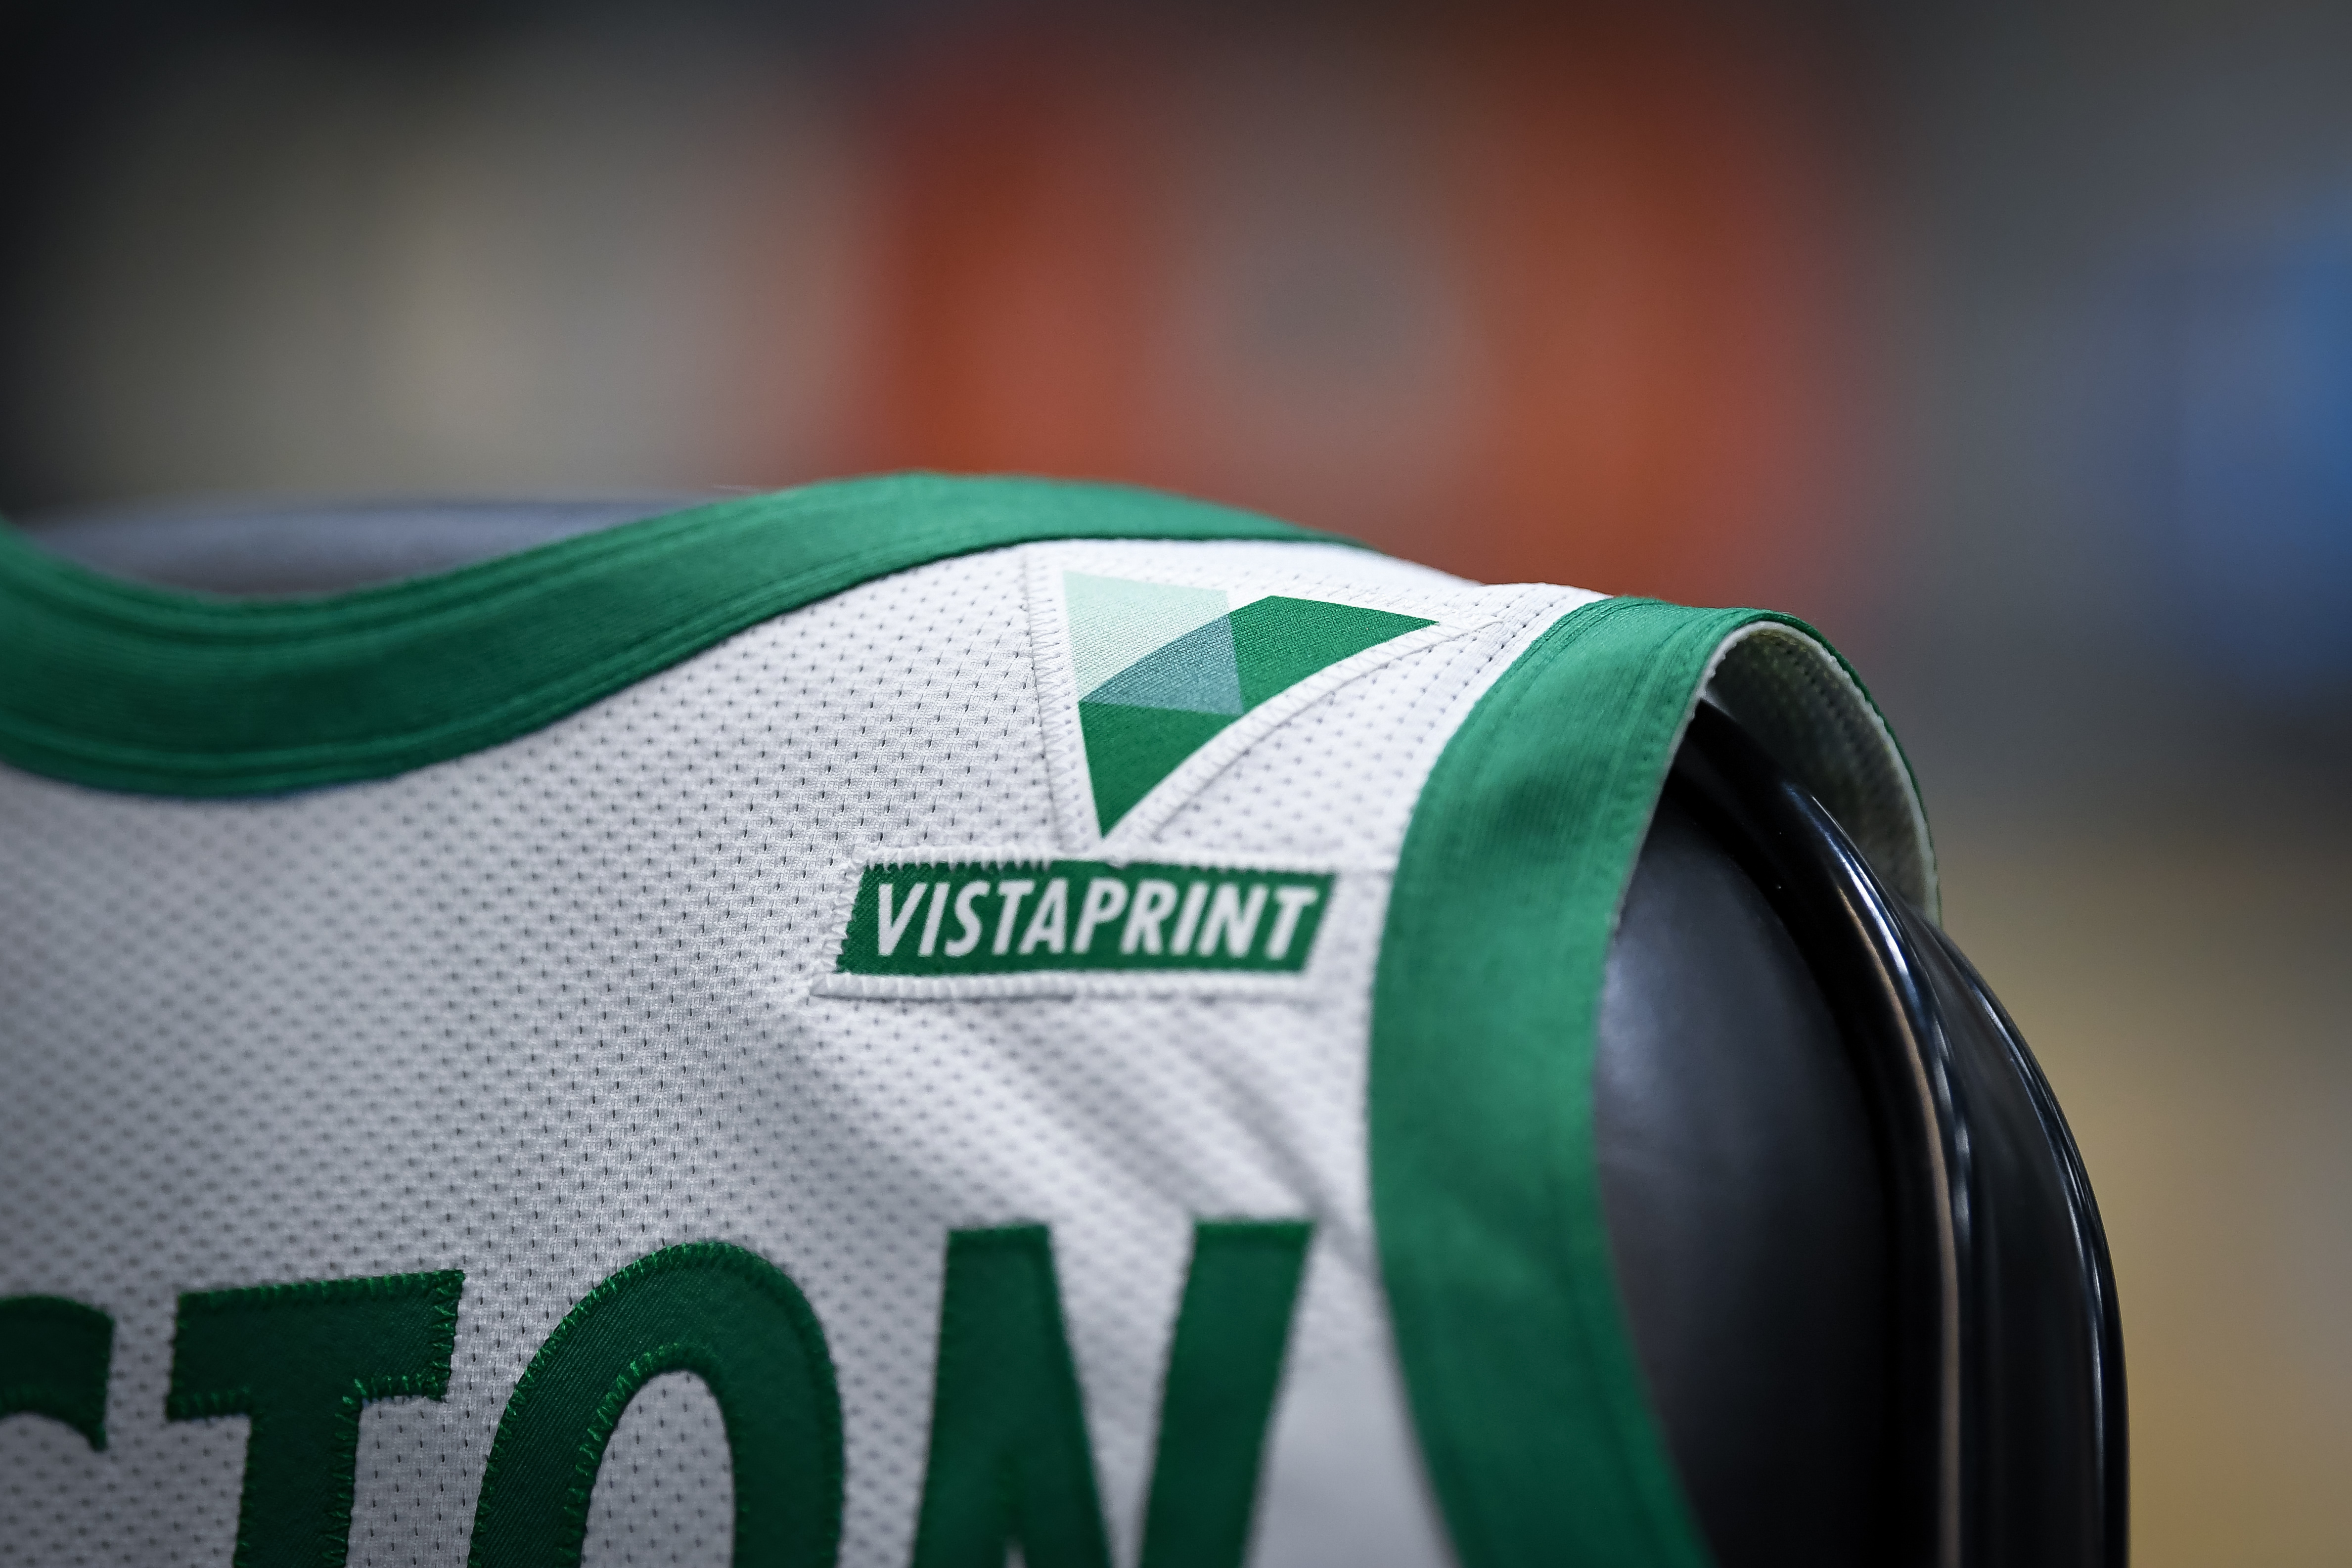 Celtics announce new partnership, jersey patch with Vistaprint